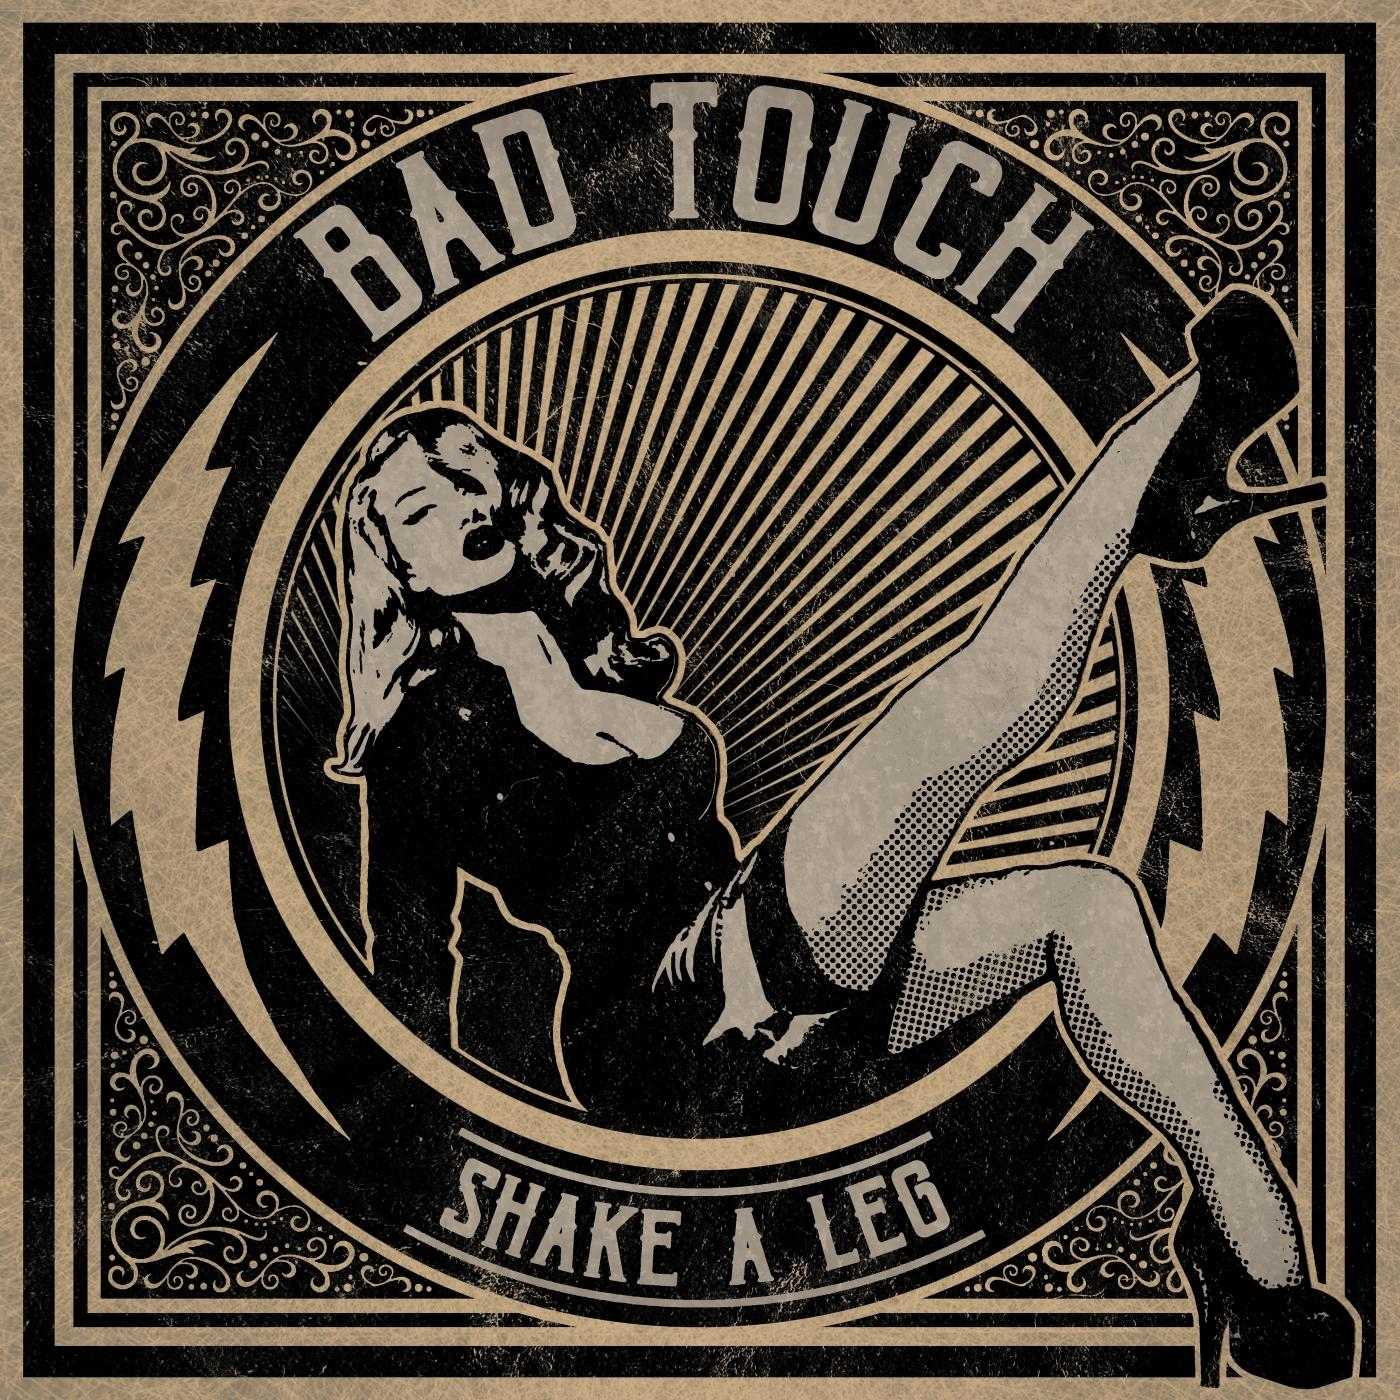 (Vinyl) Bad Touch A - - Leg Shake